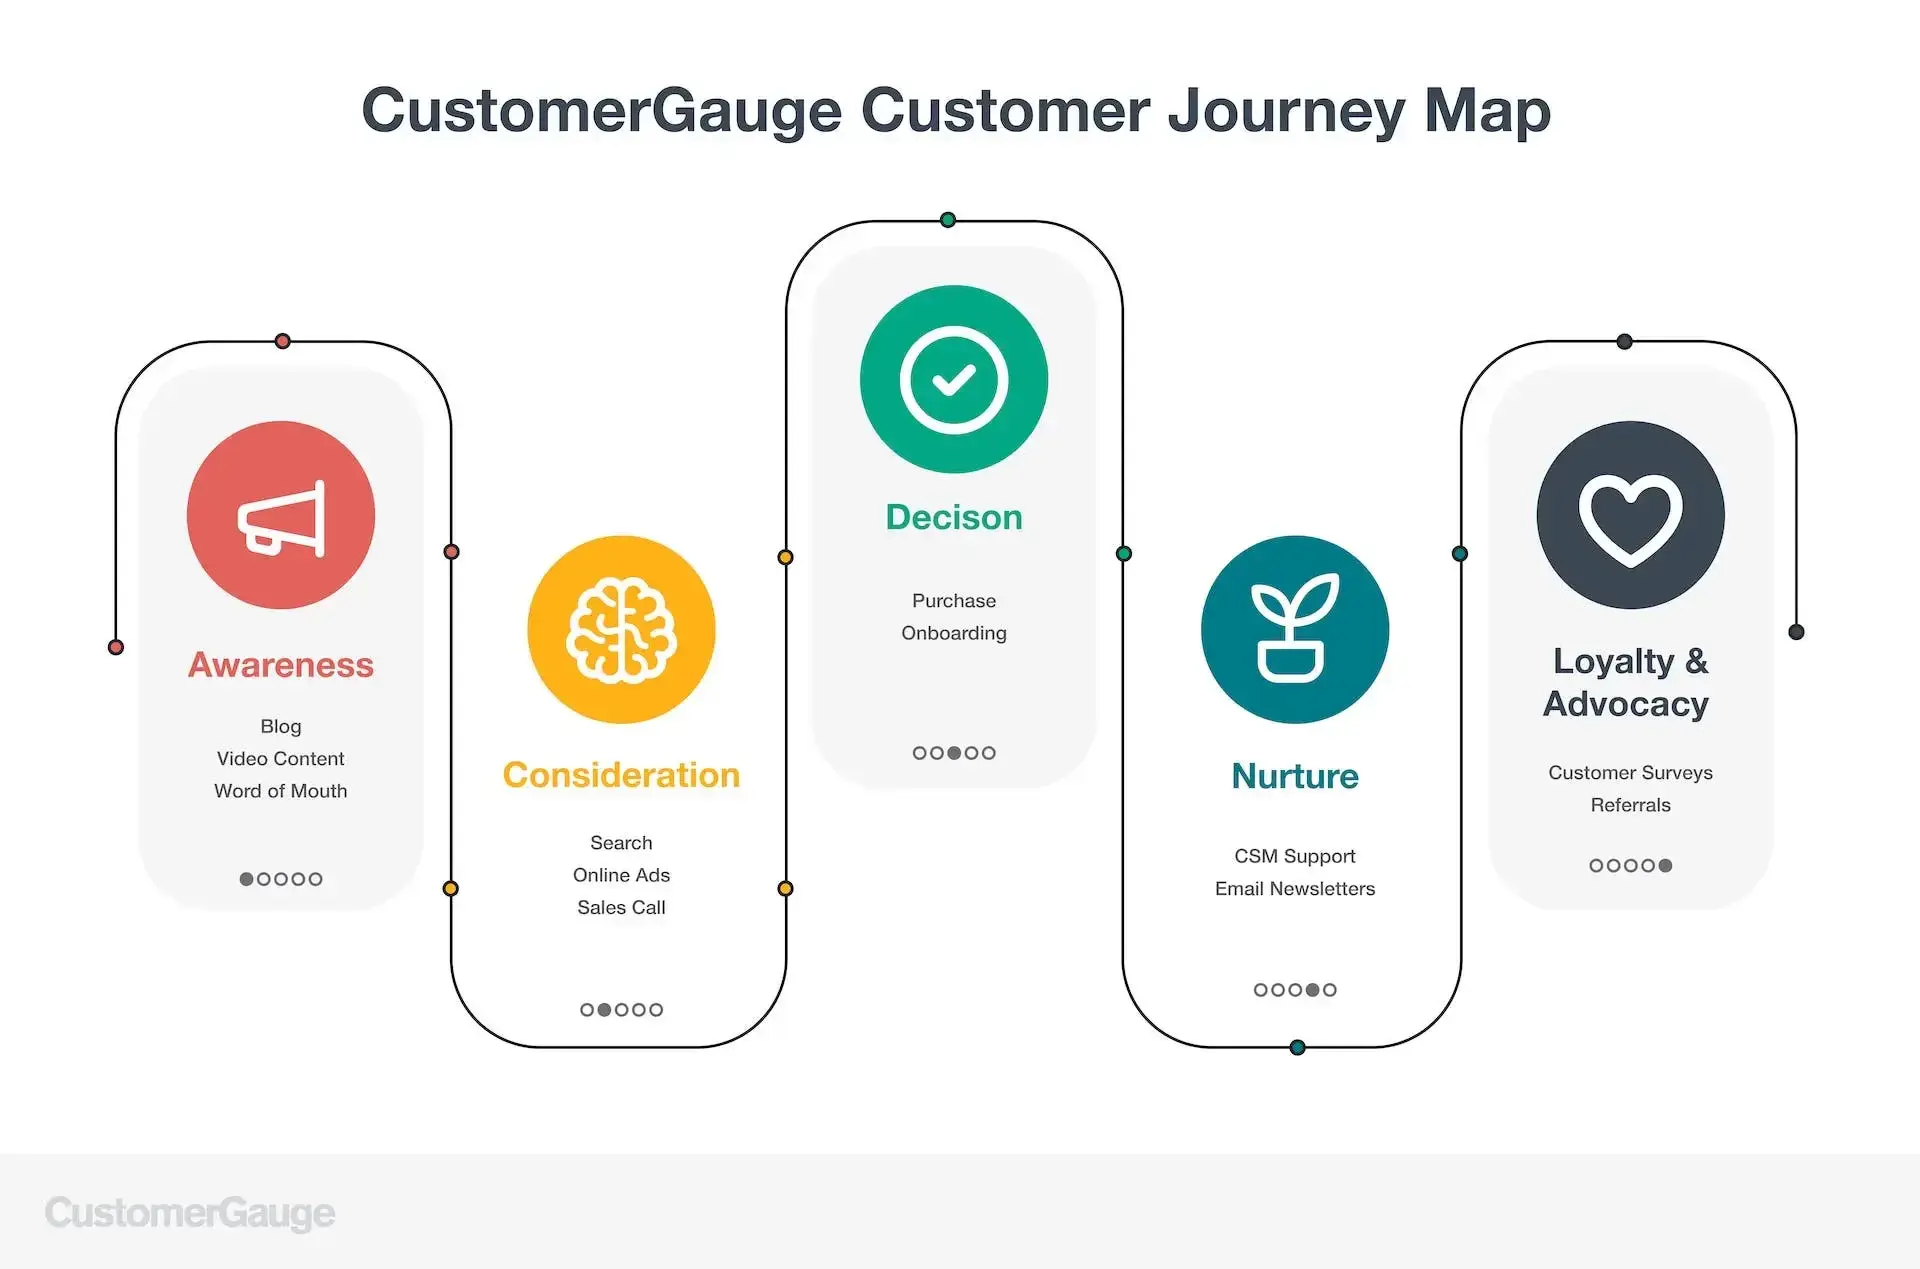 Customer Journey Map by CustomerGauge